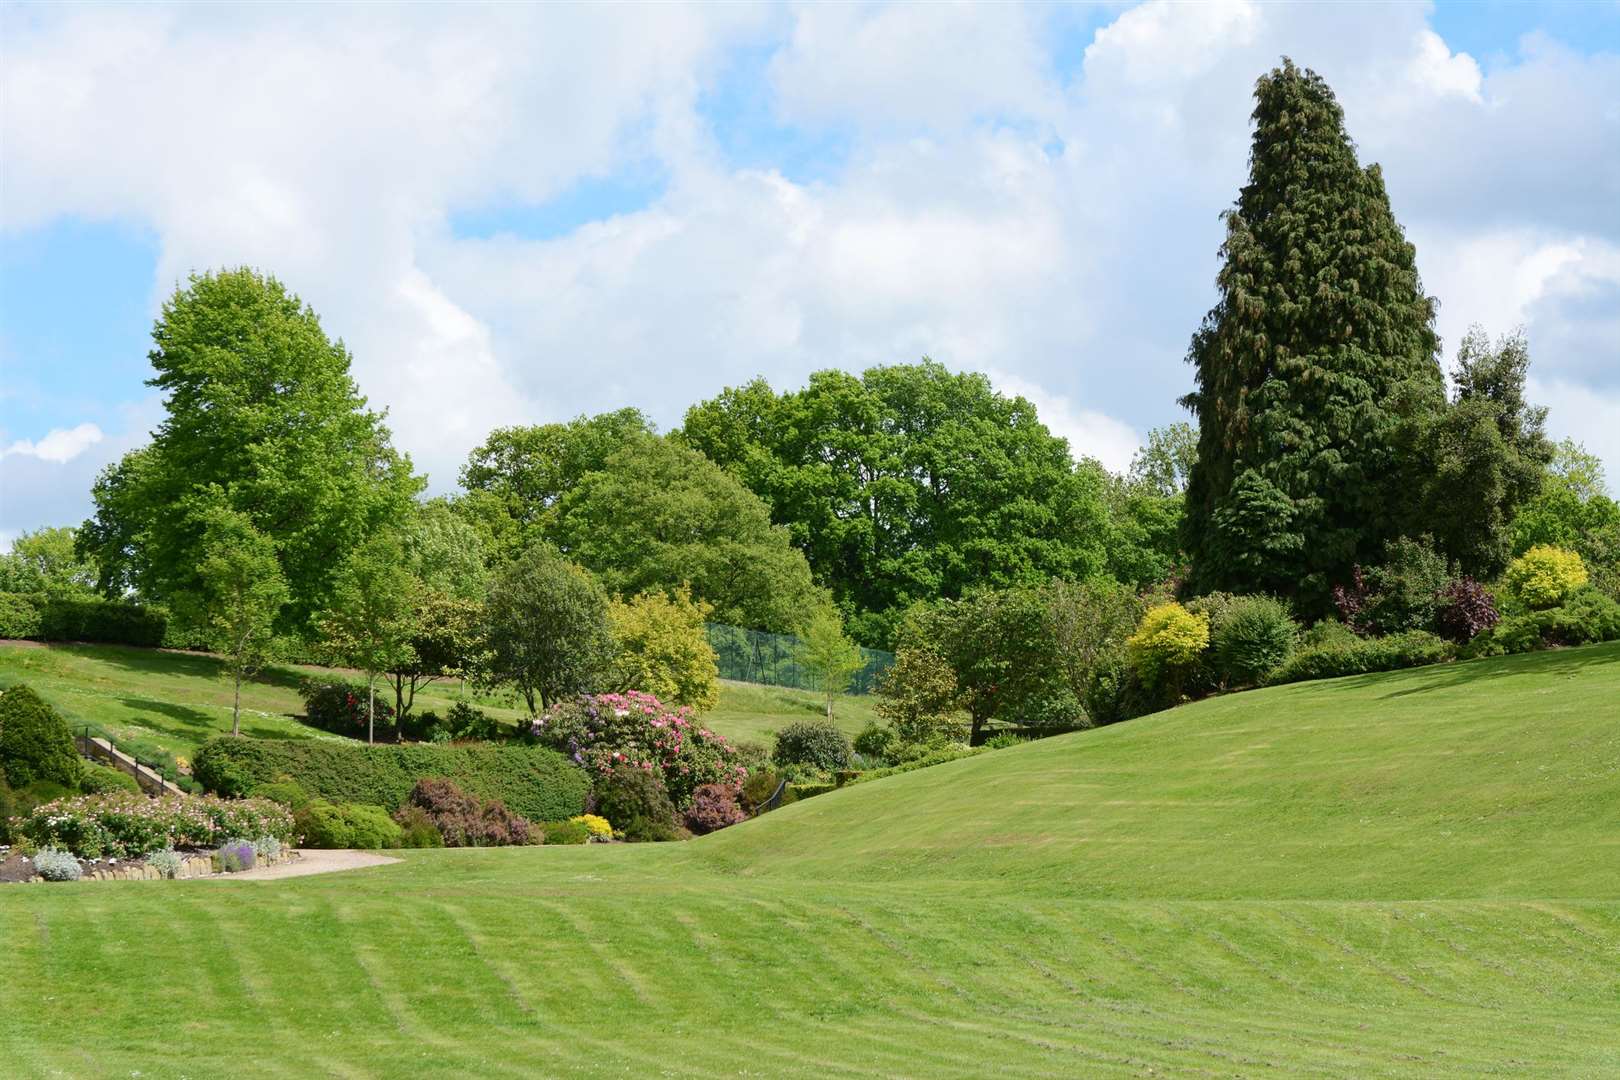 Calverley Grounds - picturesque public park in Royal Tunbridge Wells